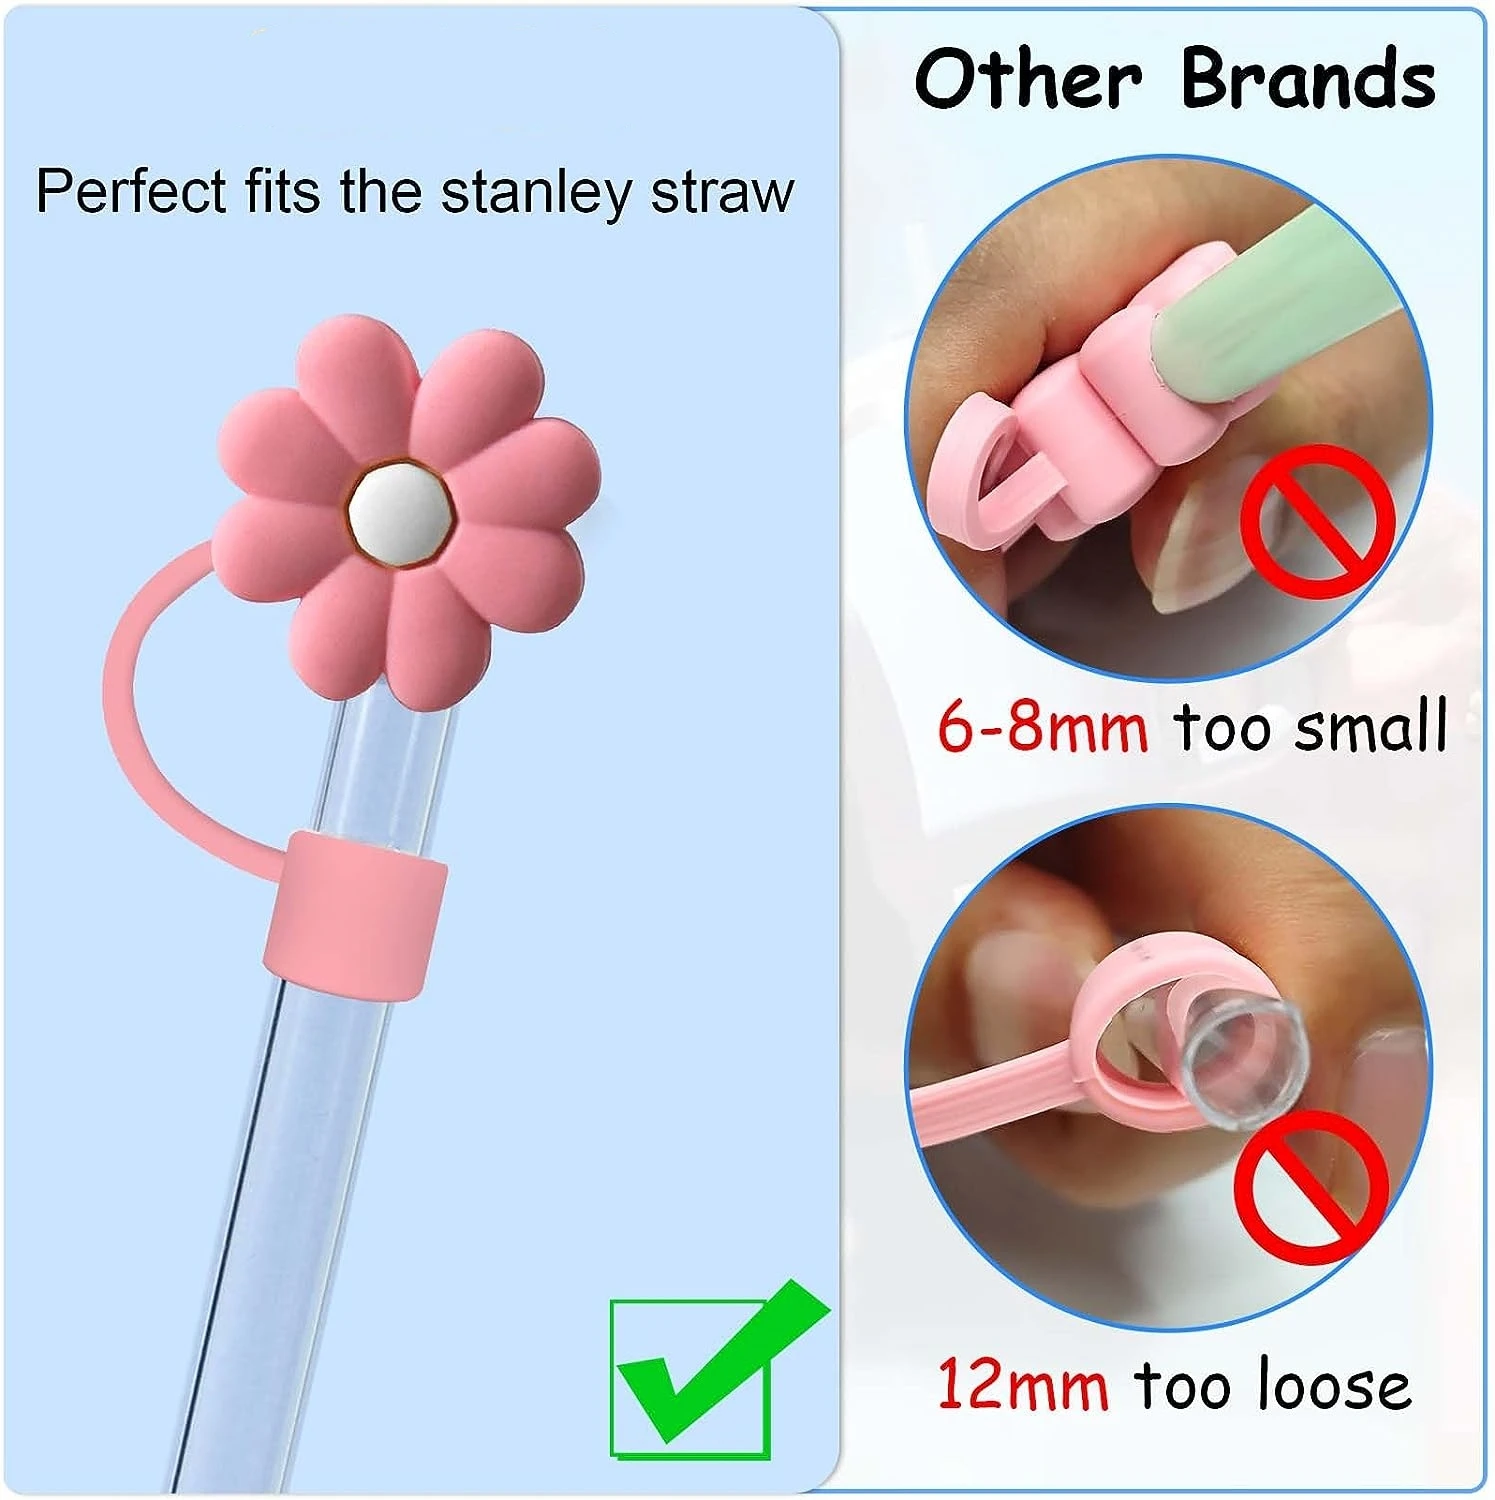 https://ae01.alicdn.com/kf/Se084f6ec7f564322bcb3d7d6045620b1y/9PCS-10mm-Silicone-Straw-Lid-Dustproof-Straw-for-Stanley-Cup-Reusable-Dustproof-Flower-Straw-Lid-Mug.jpg